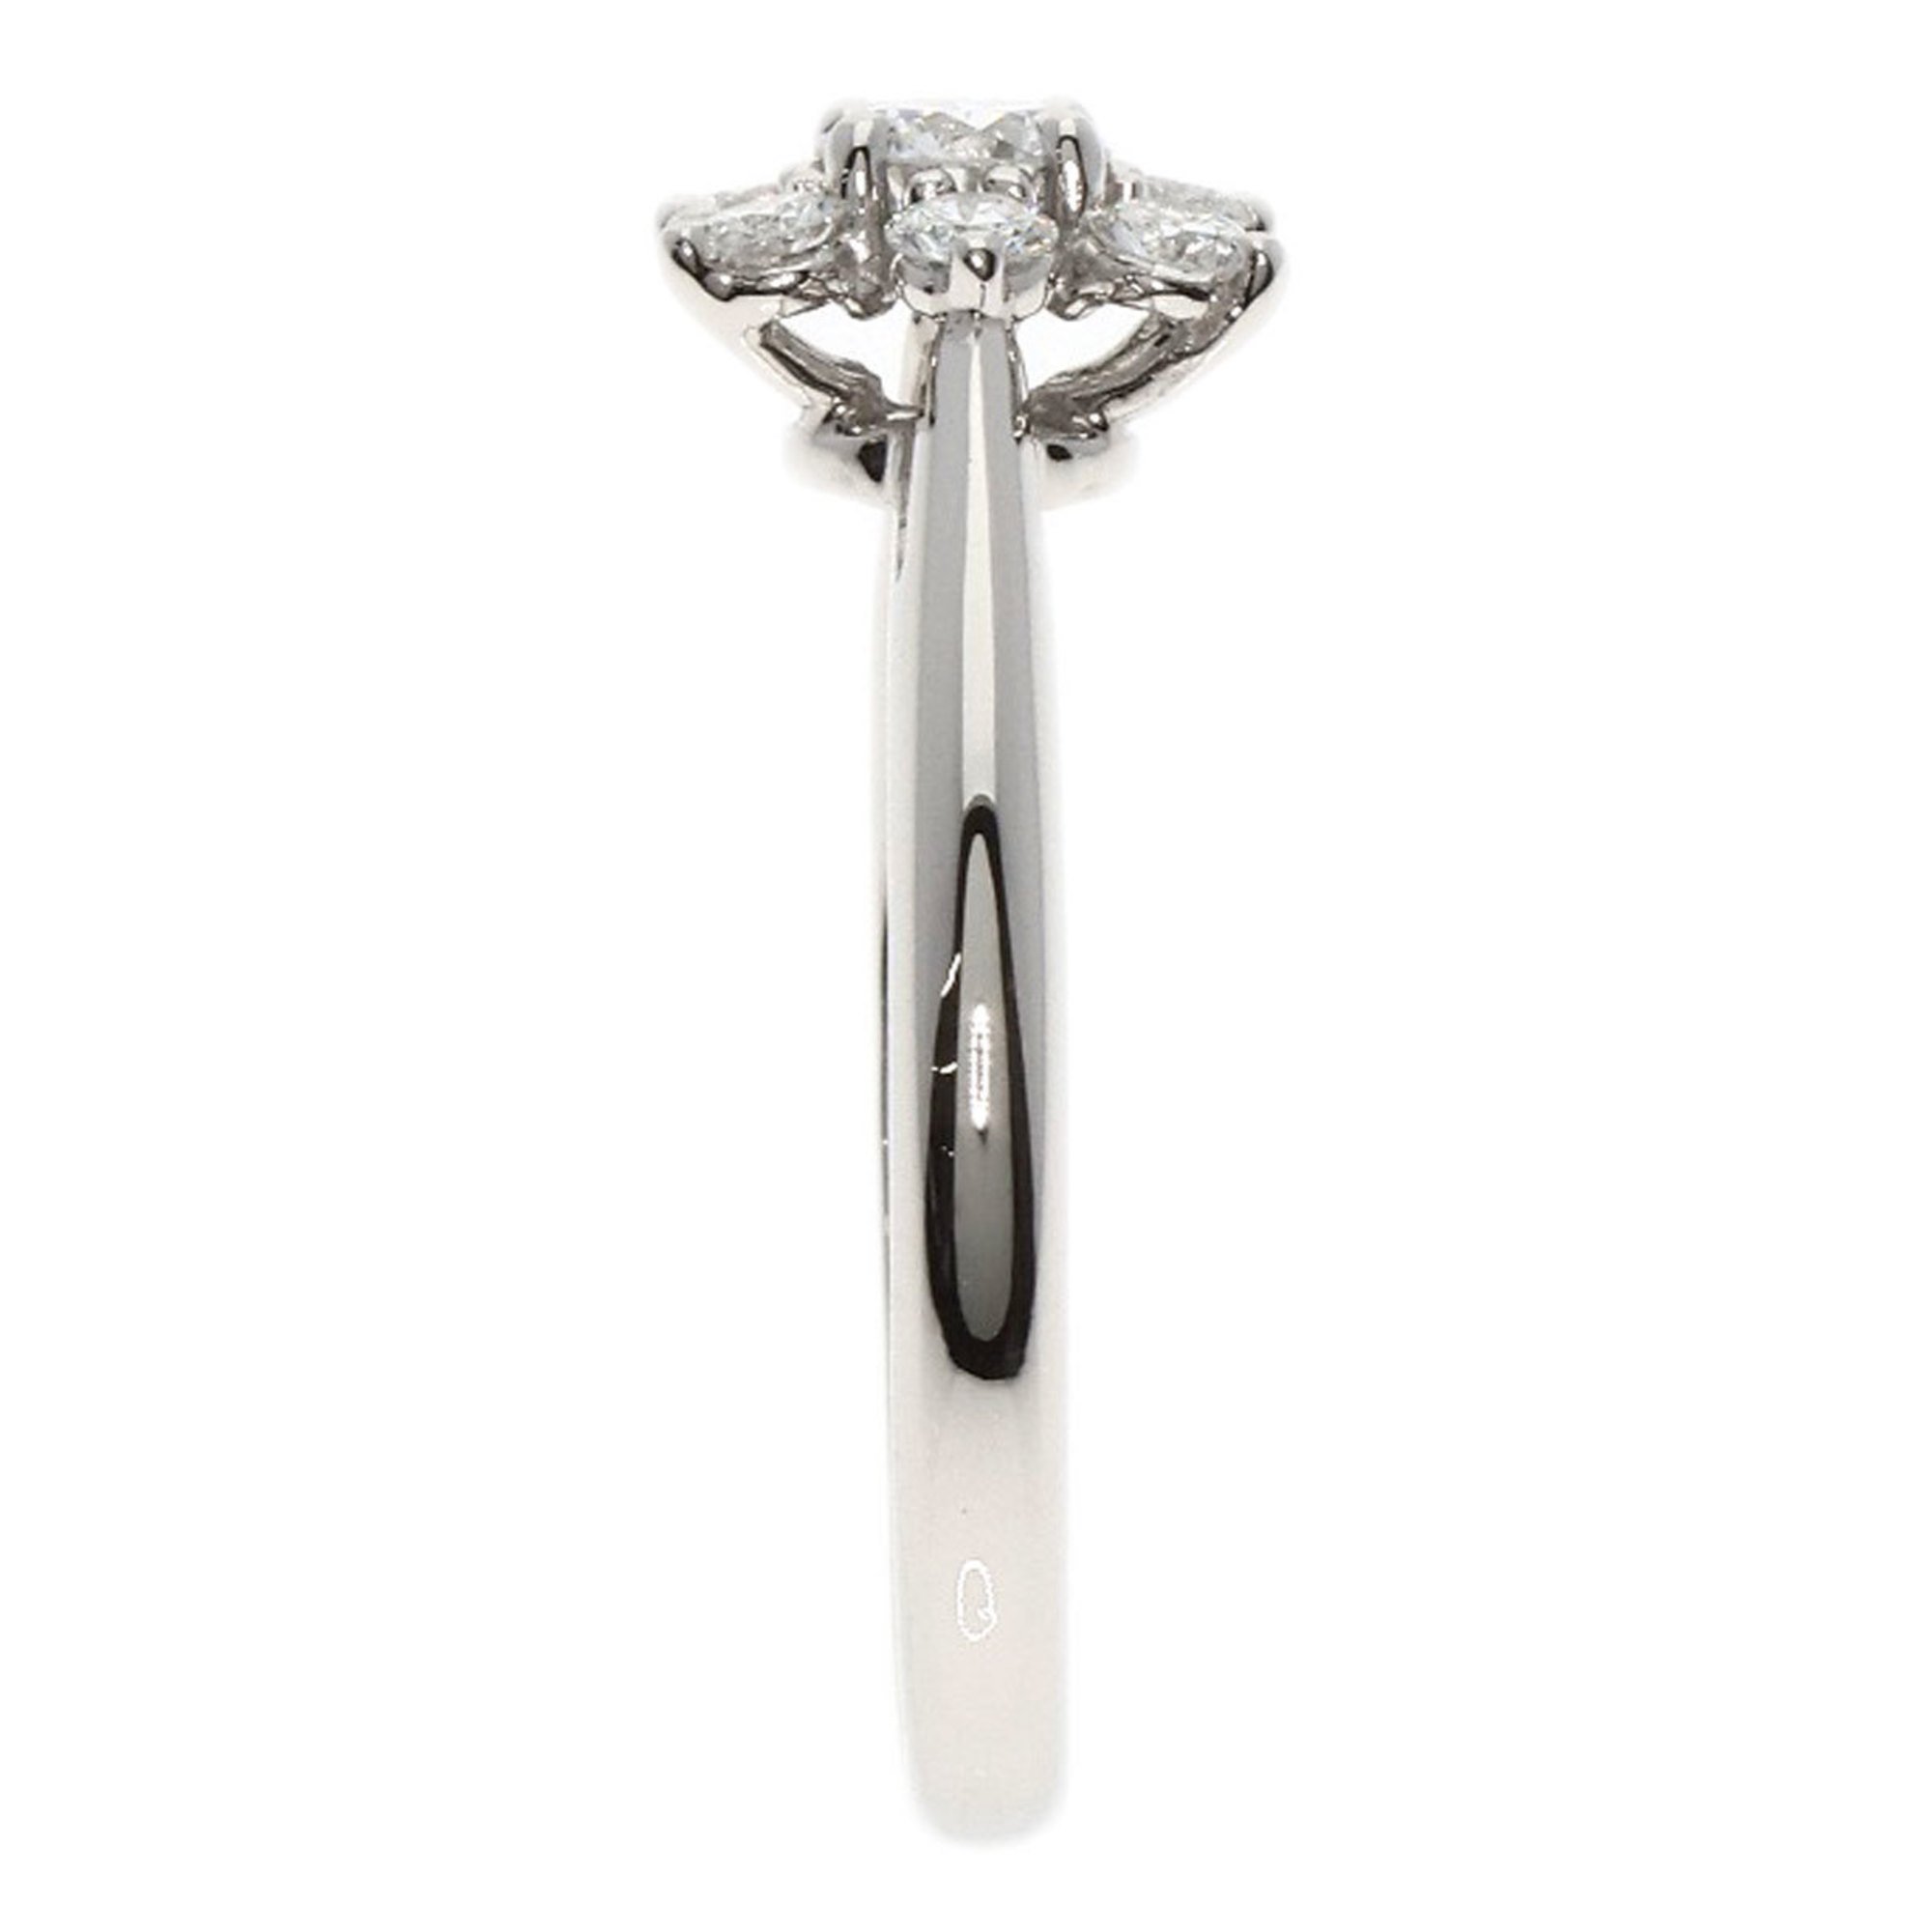 Tiffany Buttercup Diamond Ring Platinum PT950 Women's TIFFANY&Co.